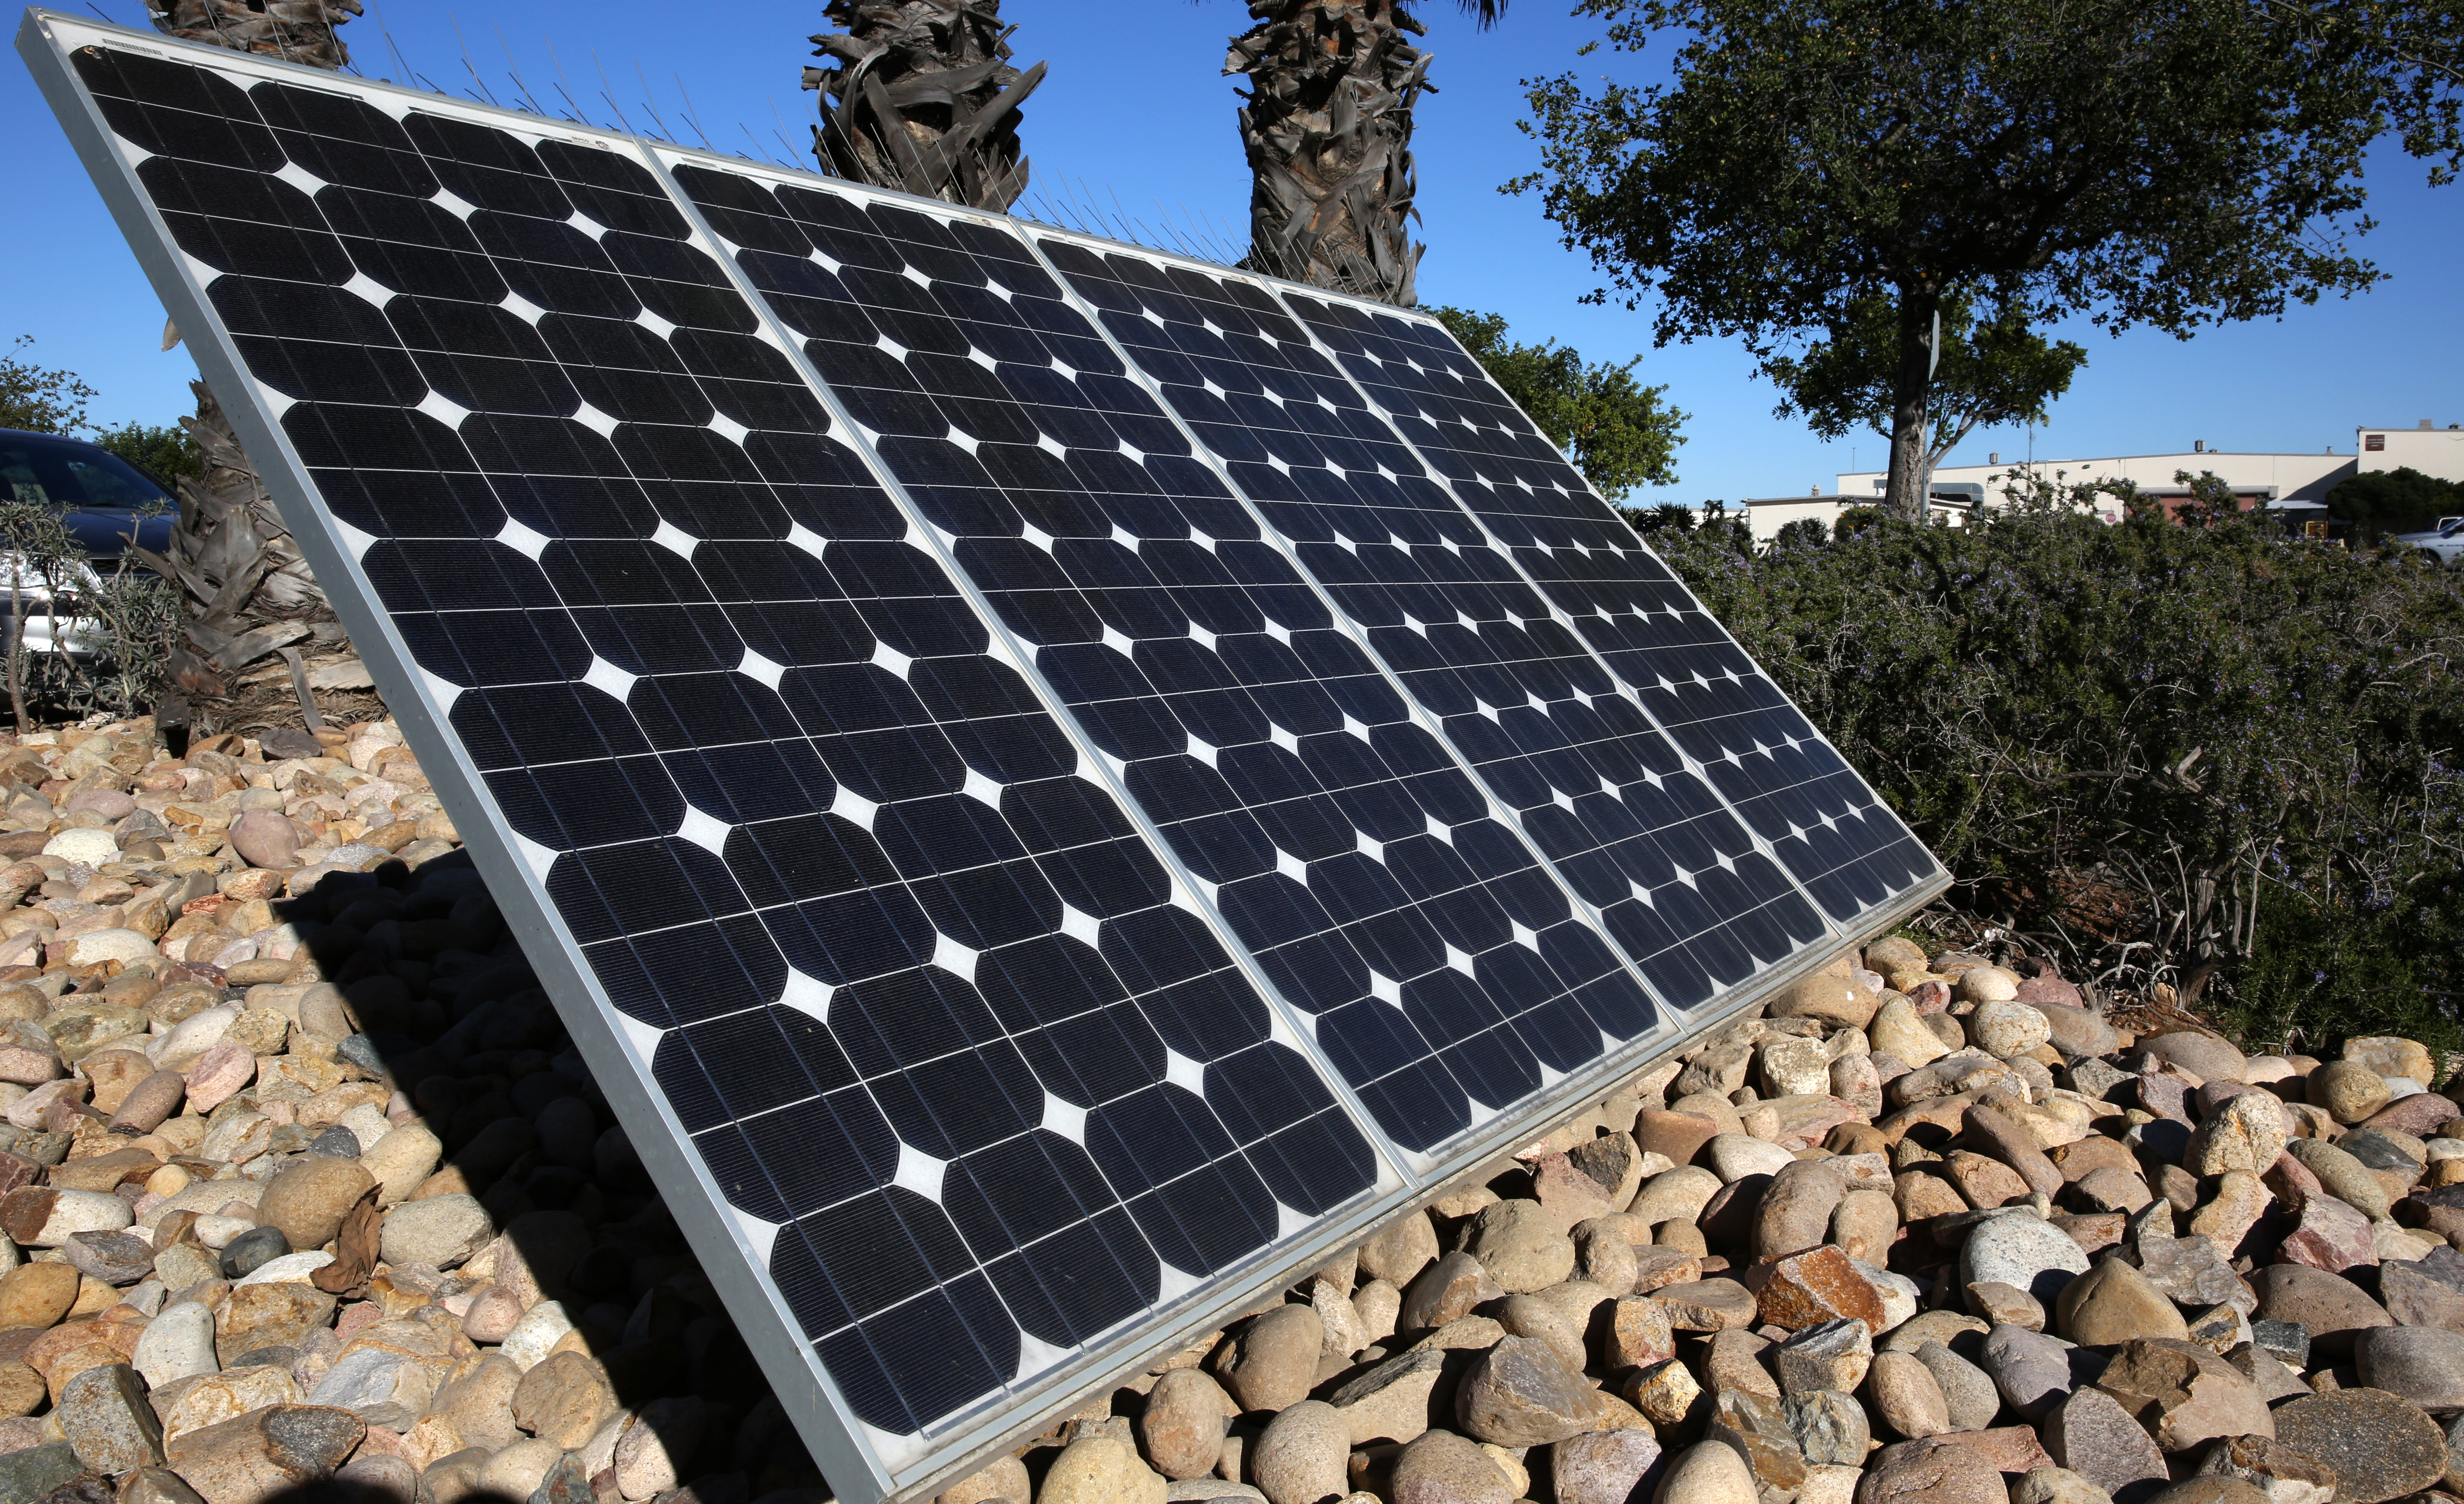 Solar panel - Wikipedia